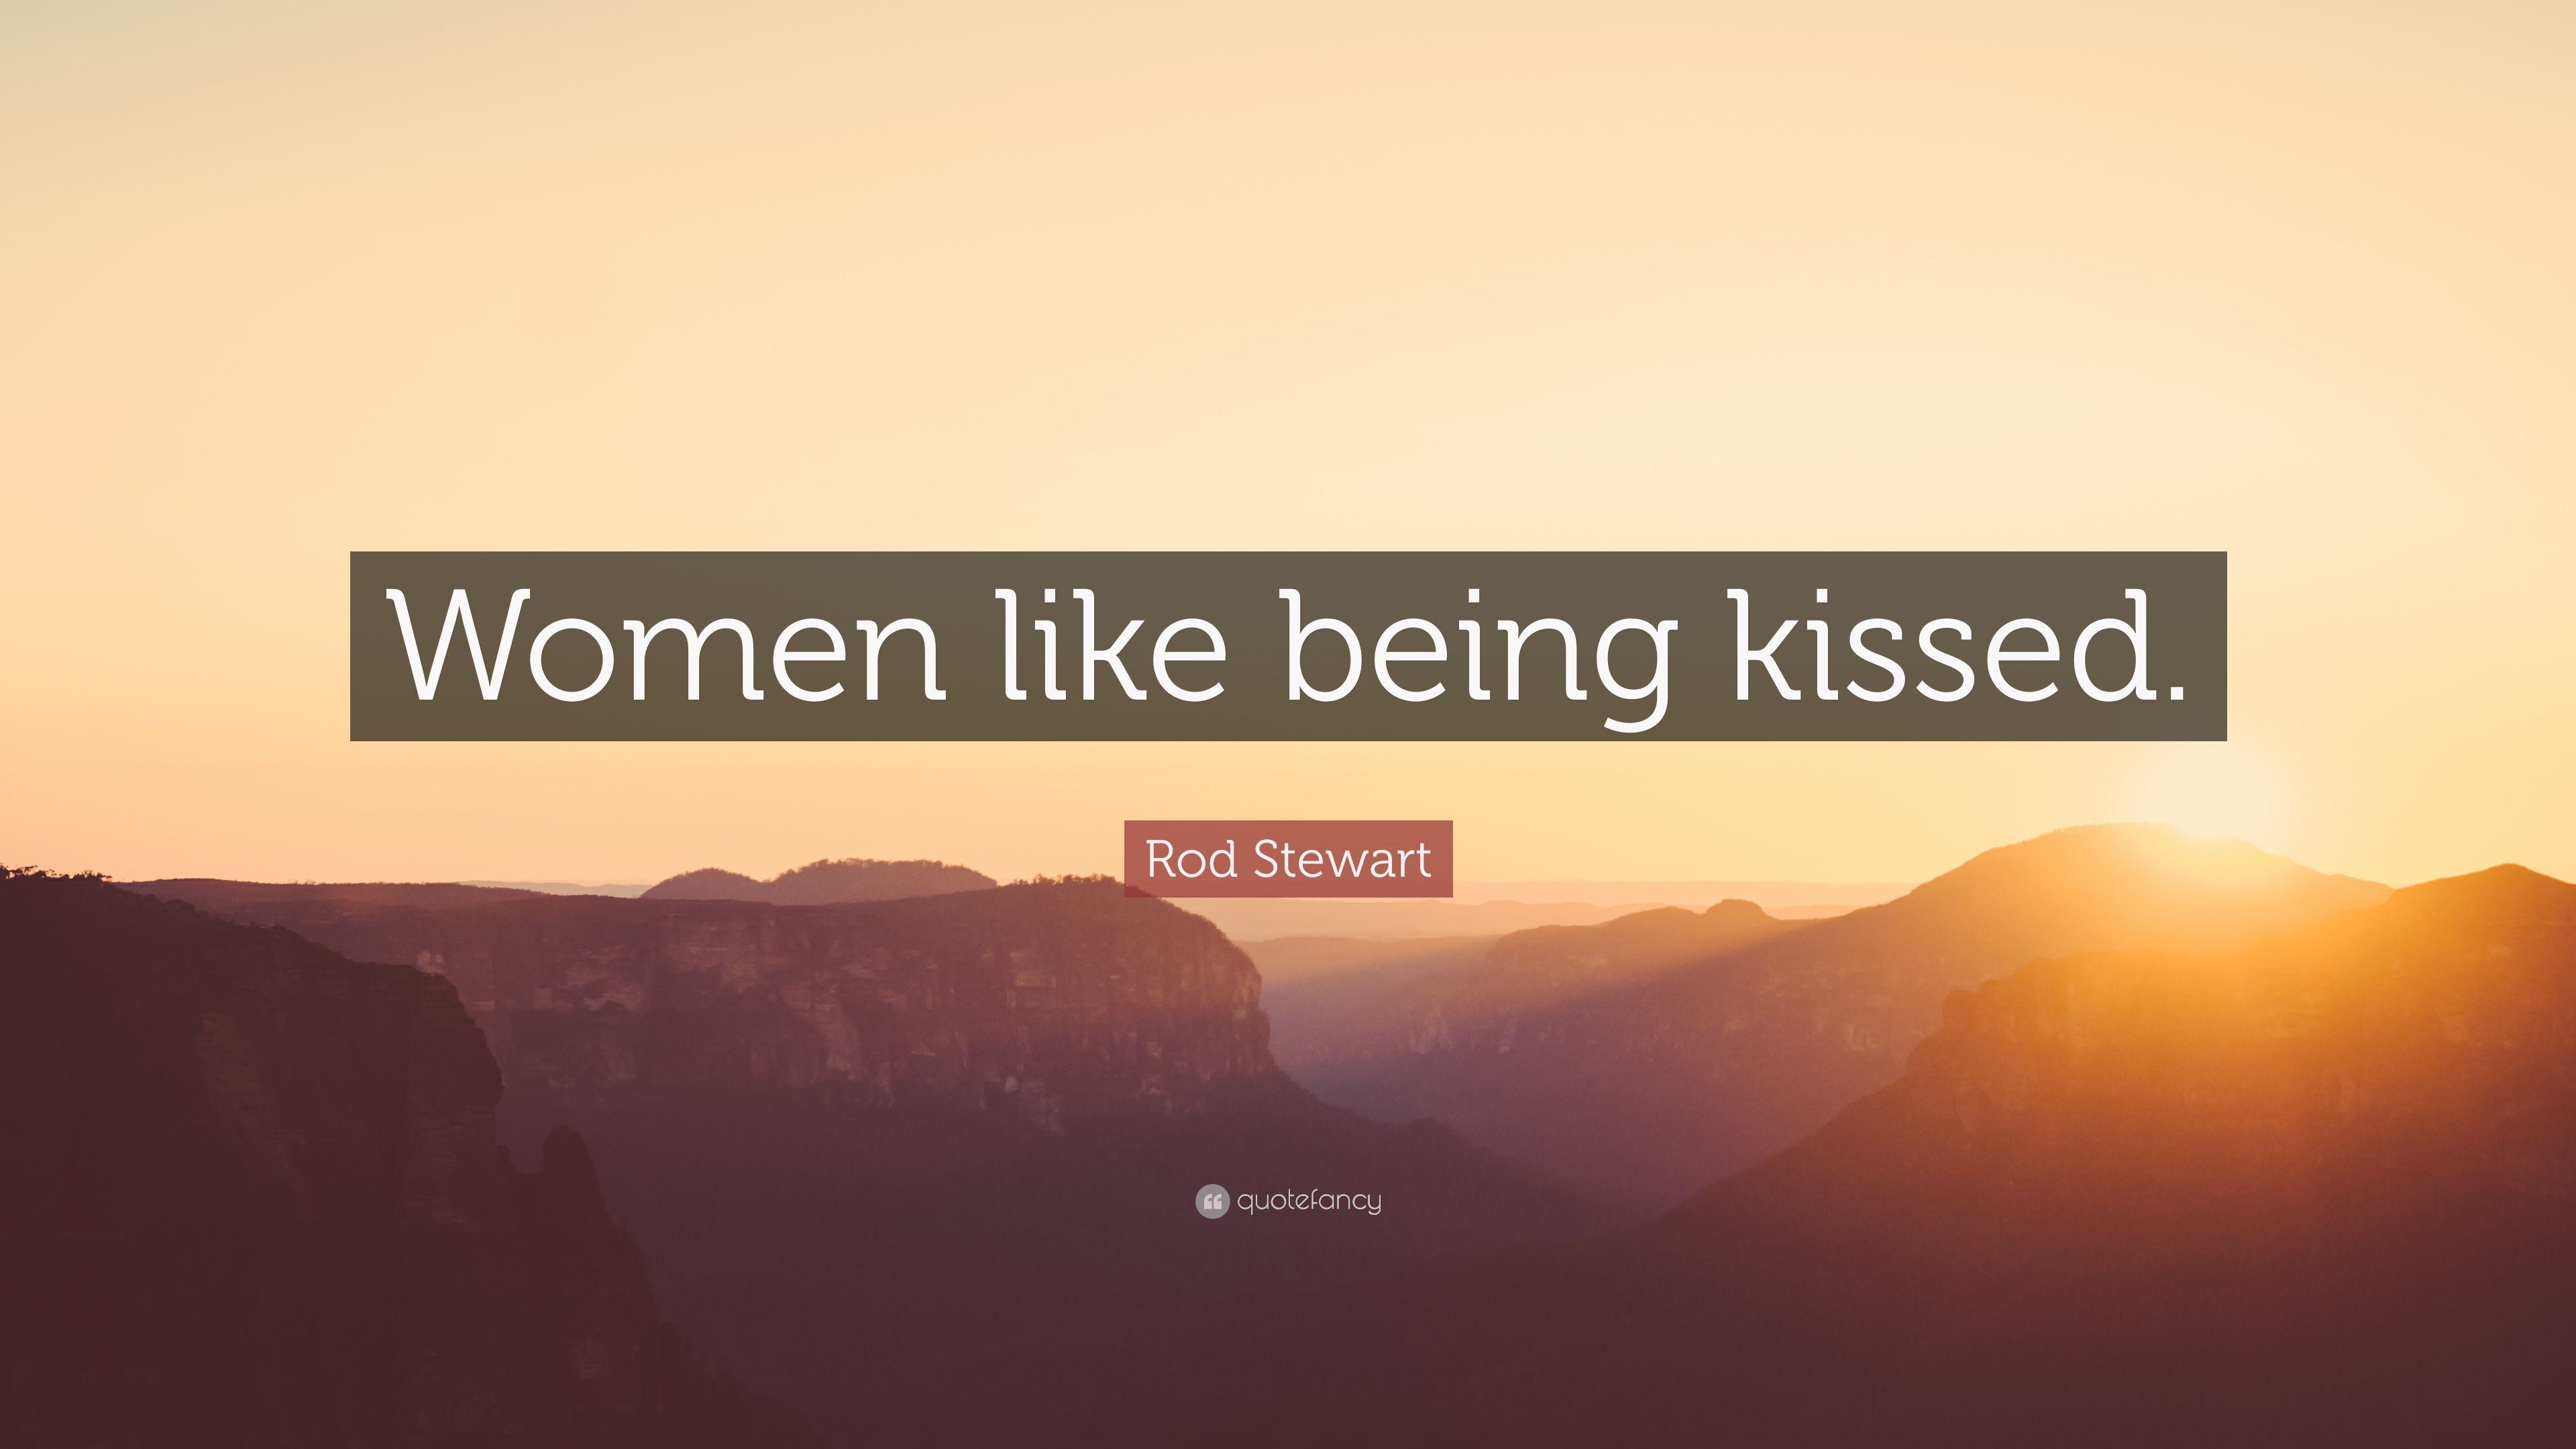 Rod Stewart Quote: “Women like being kissed.” 7 wallpaper